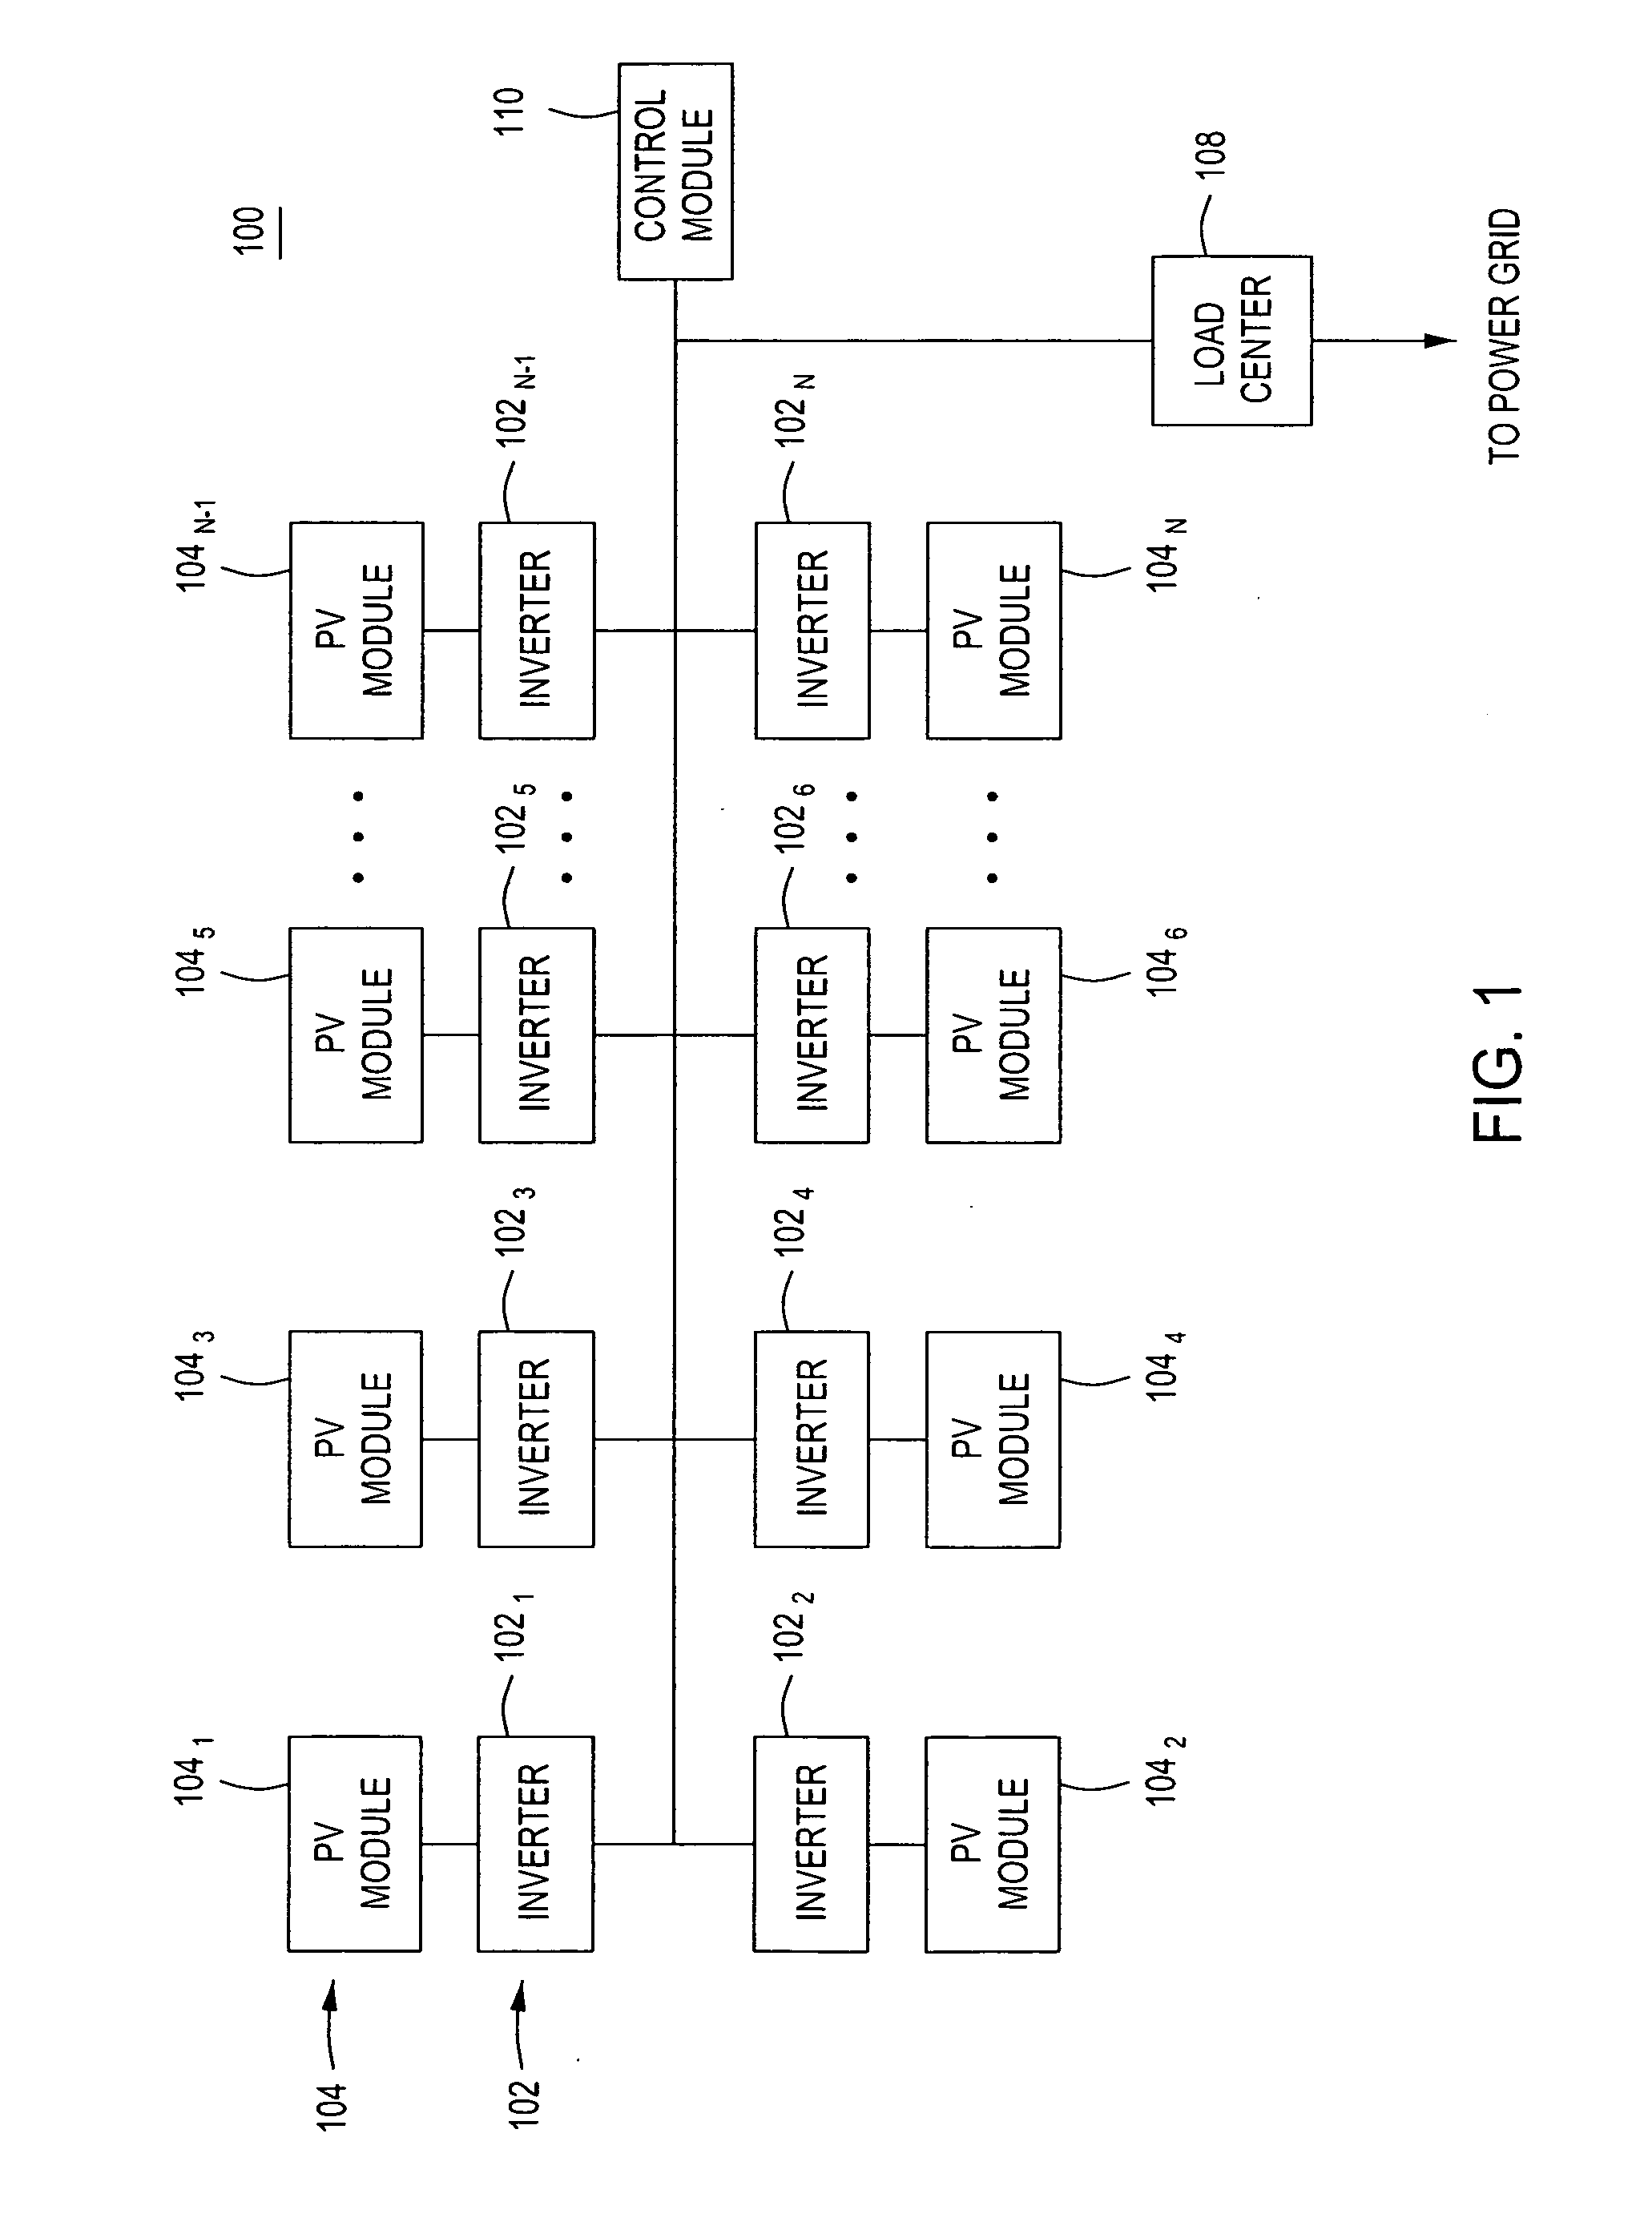 Method and apparatus for determining AC voltage waveform anomalies